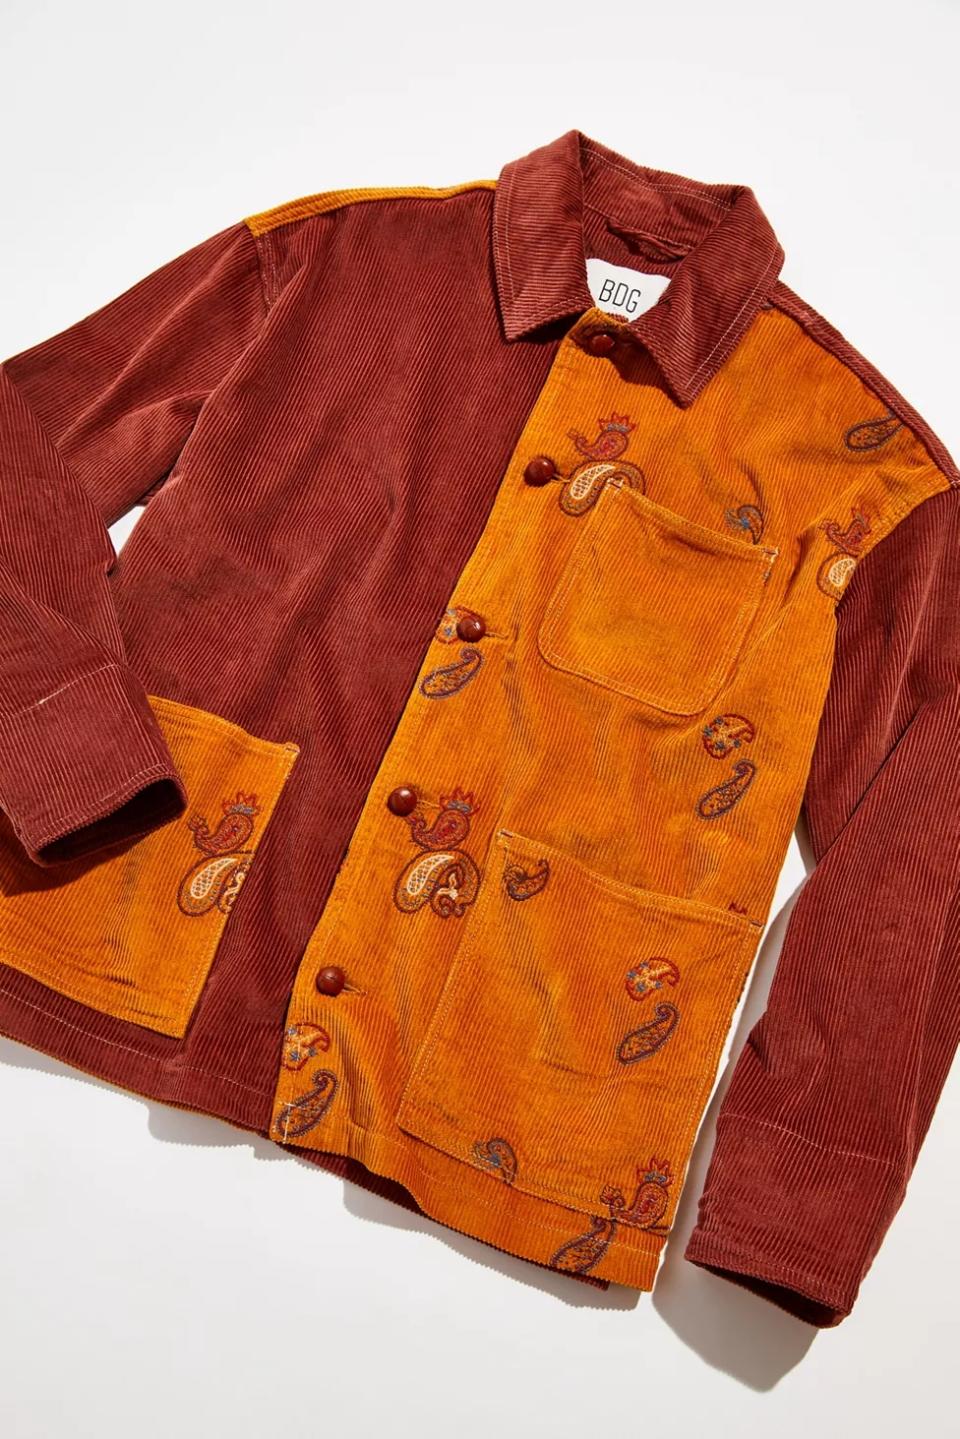 Brown and burgundy corduroy chore jacket